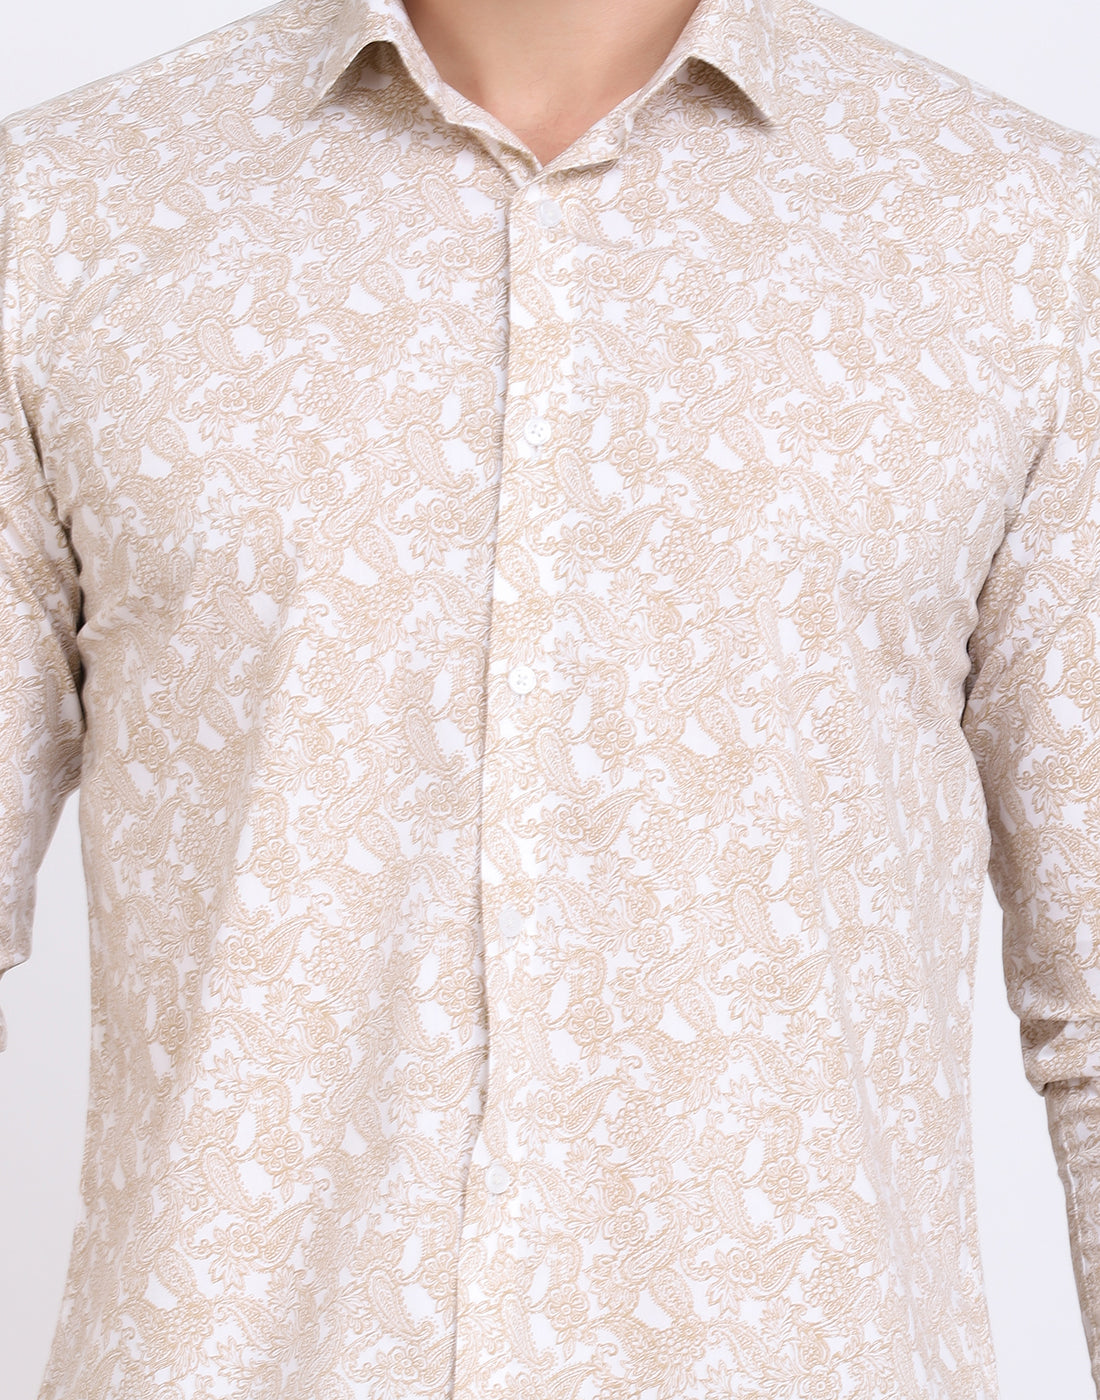 Gold & white ethnic Paisley Print cotton shirt